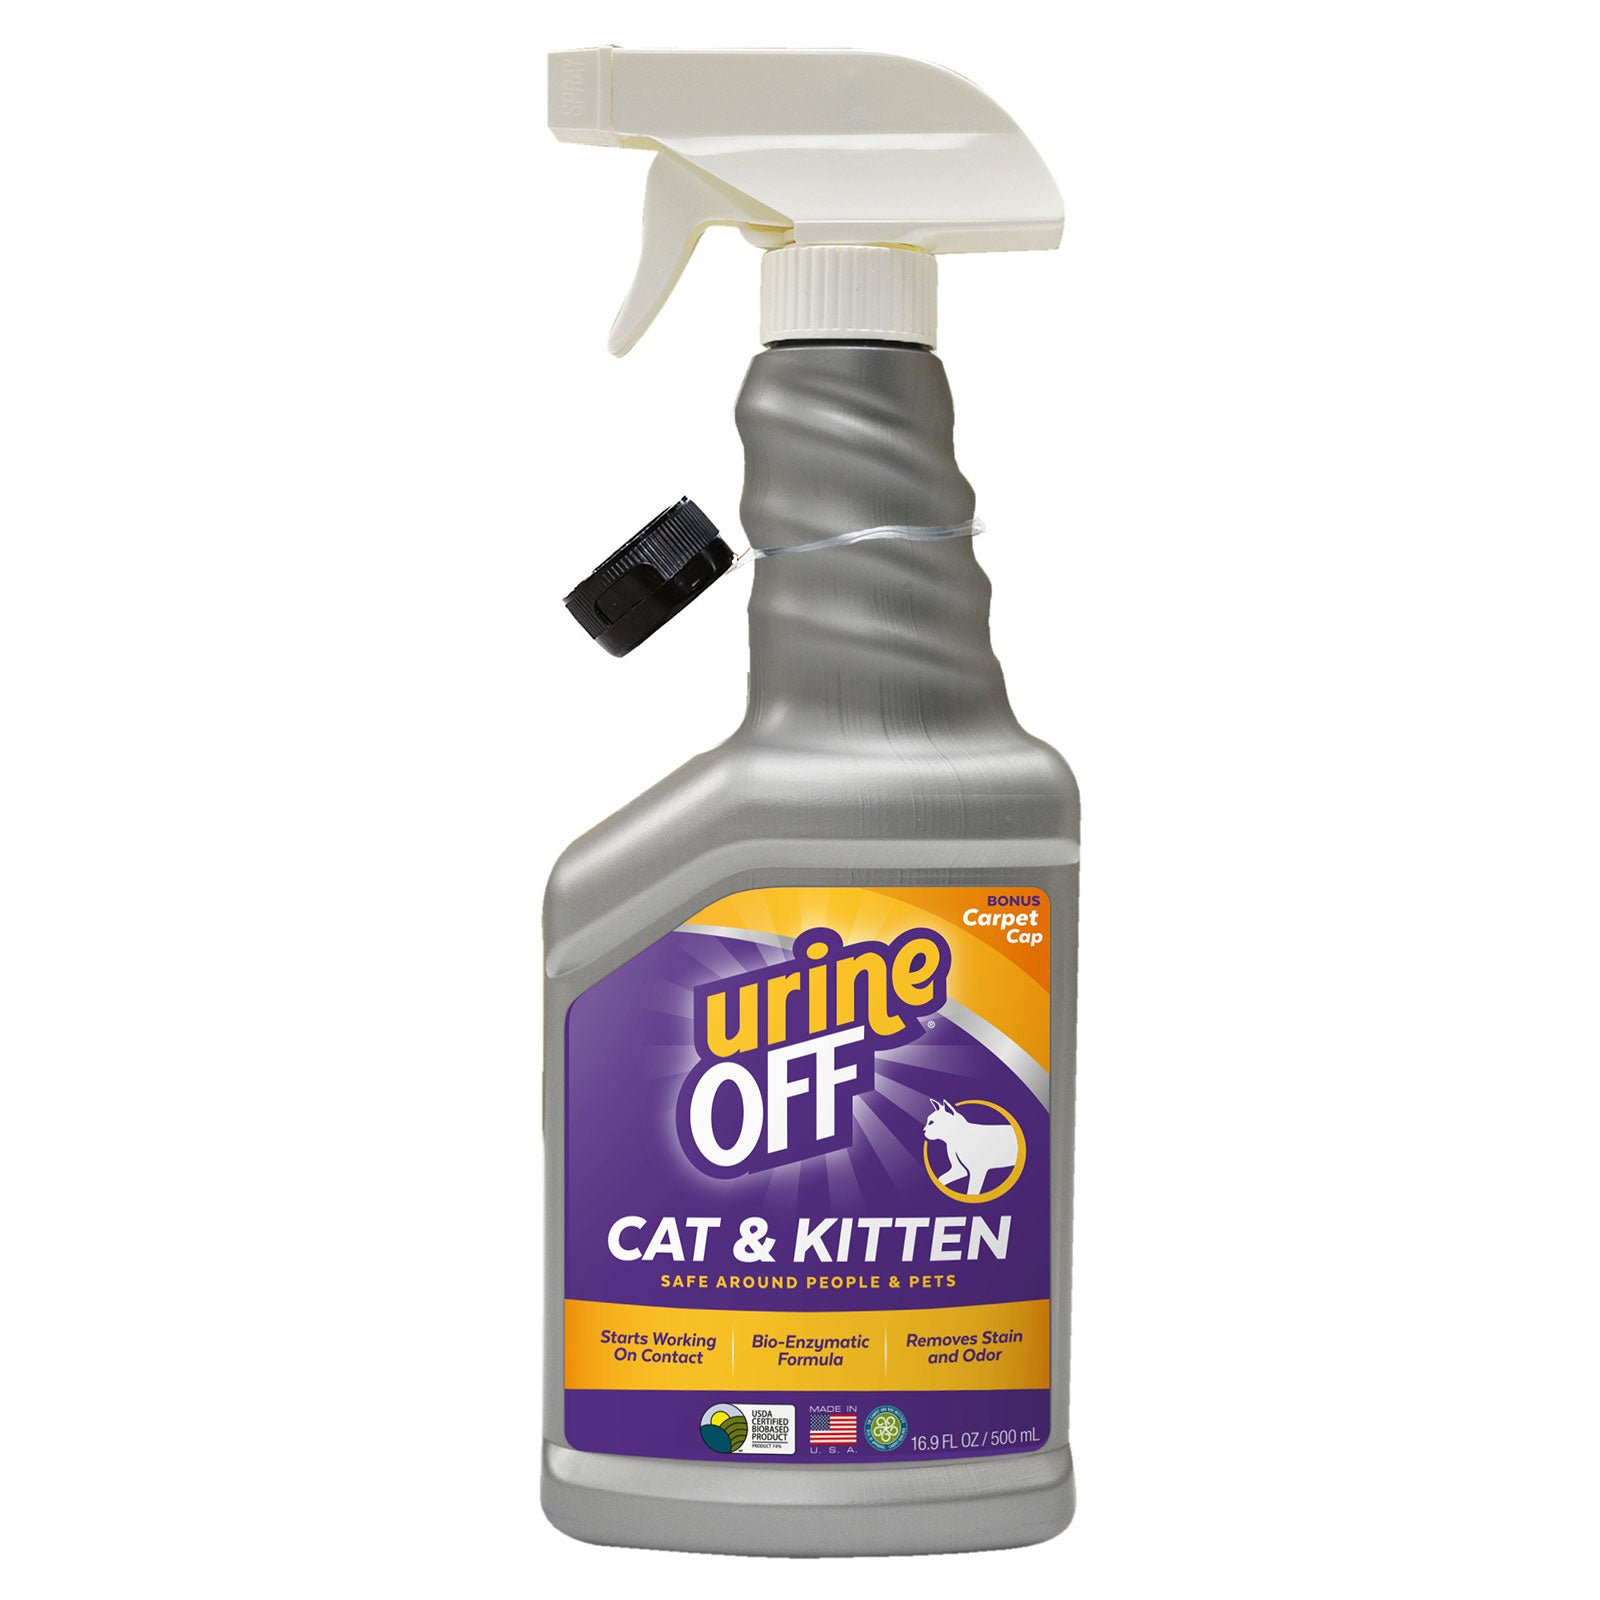 Urine Off Cat & Kitten